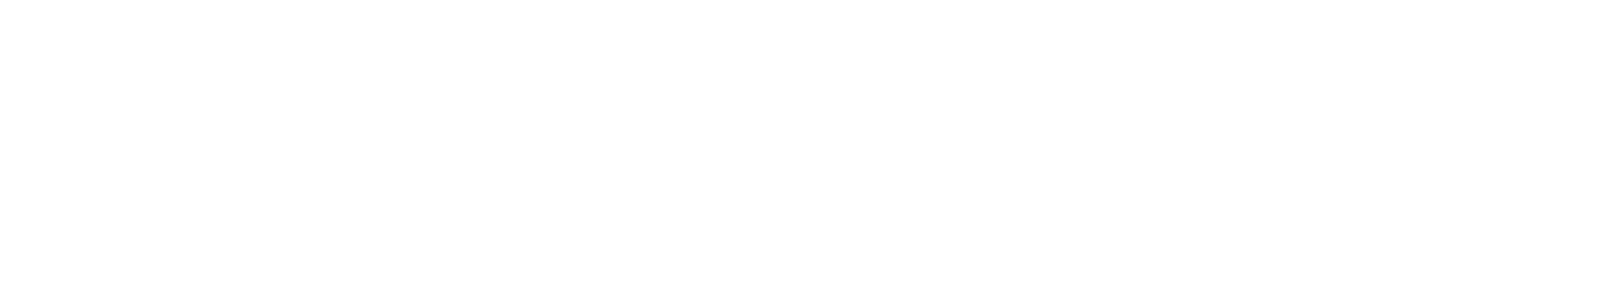 Longboard Pharmaceuticals logo large for dark backgrounds (transparent PNG)